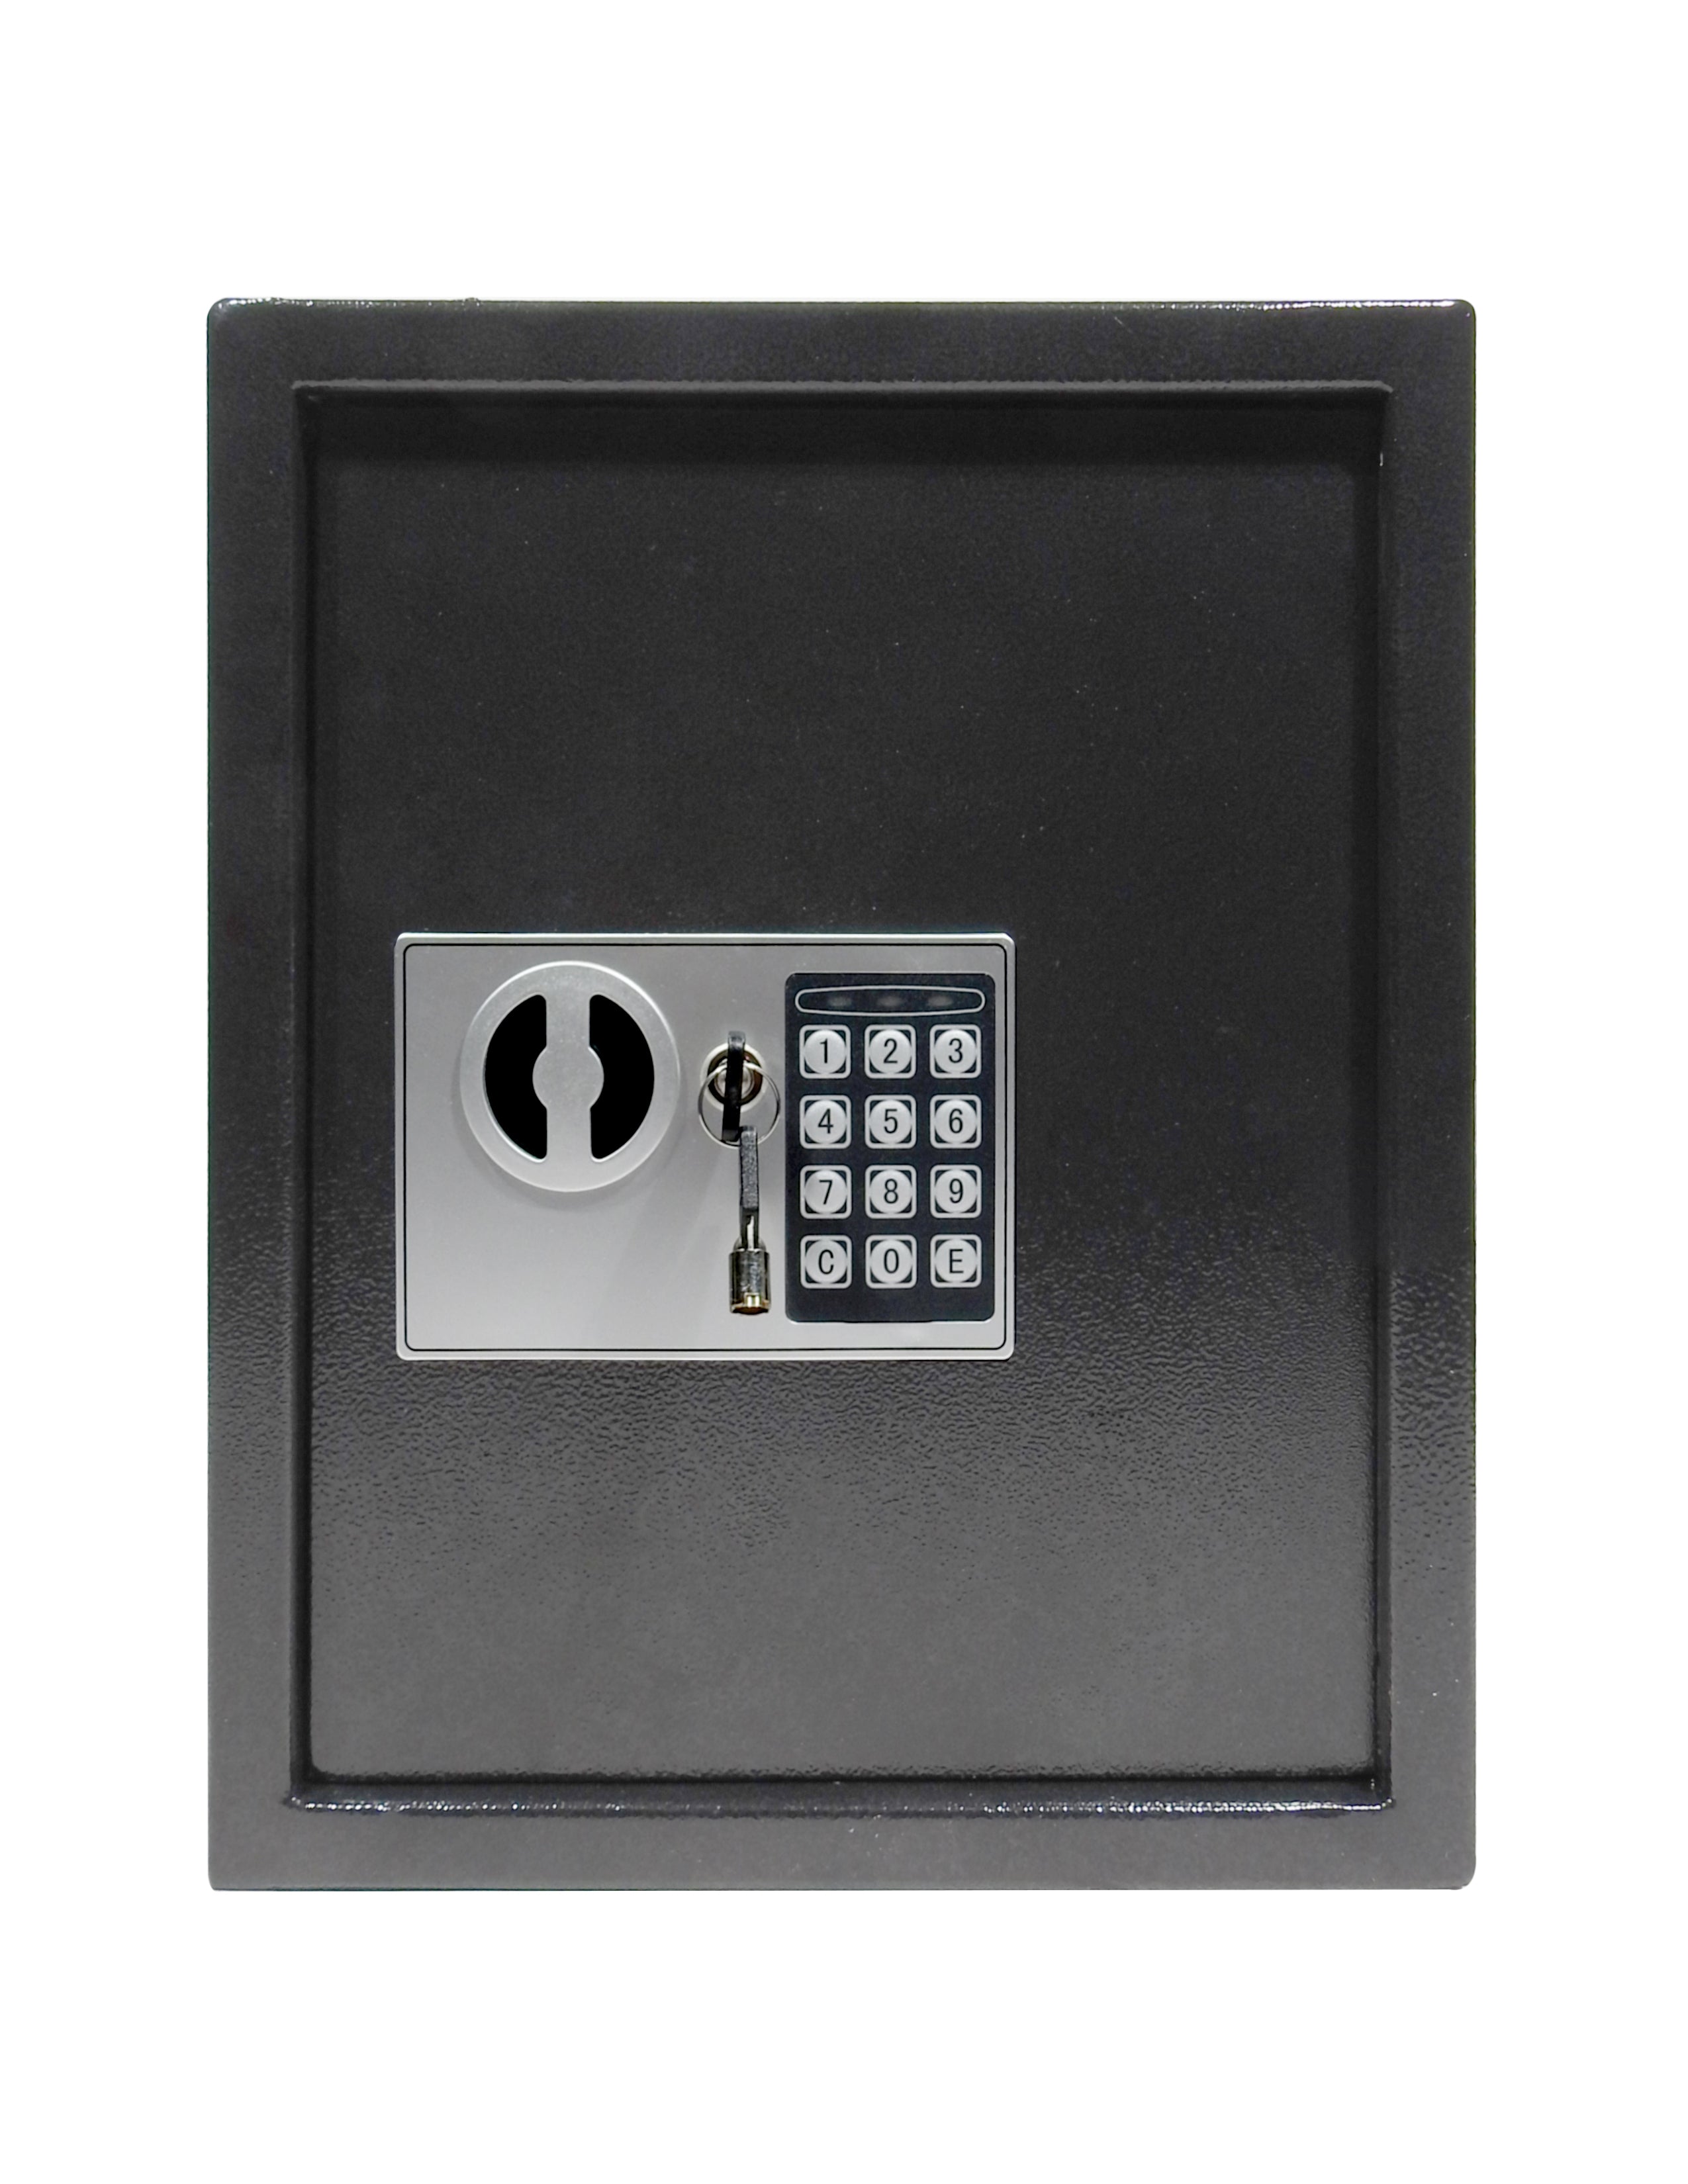 KMCG-48EL/ Electronic Key Safe - 48 keys